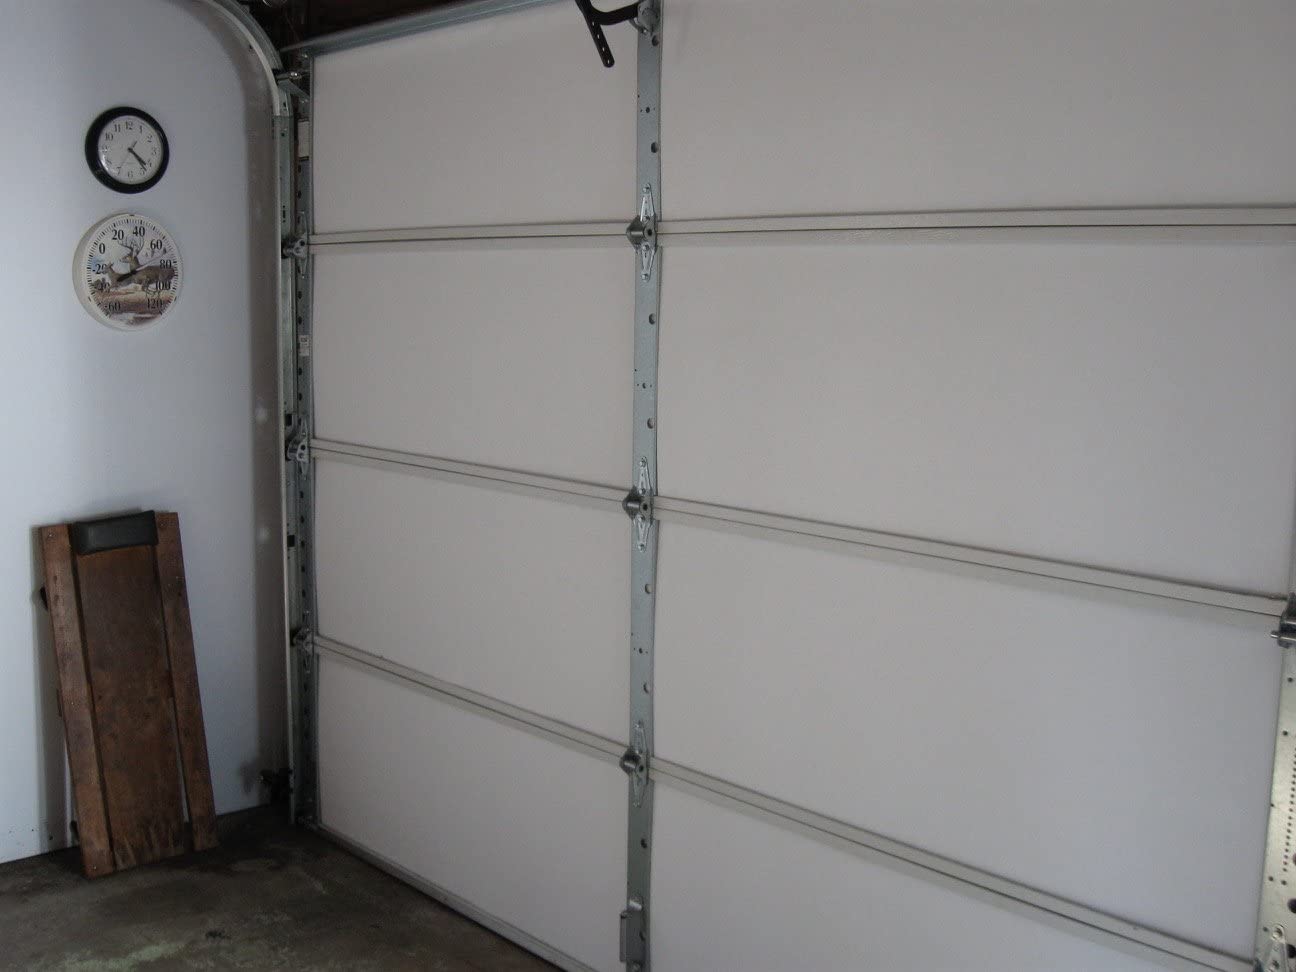 Are garage insulations worth it?